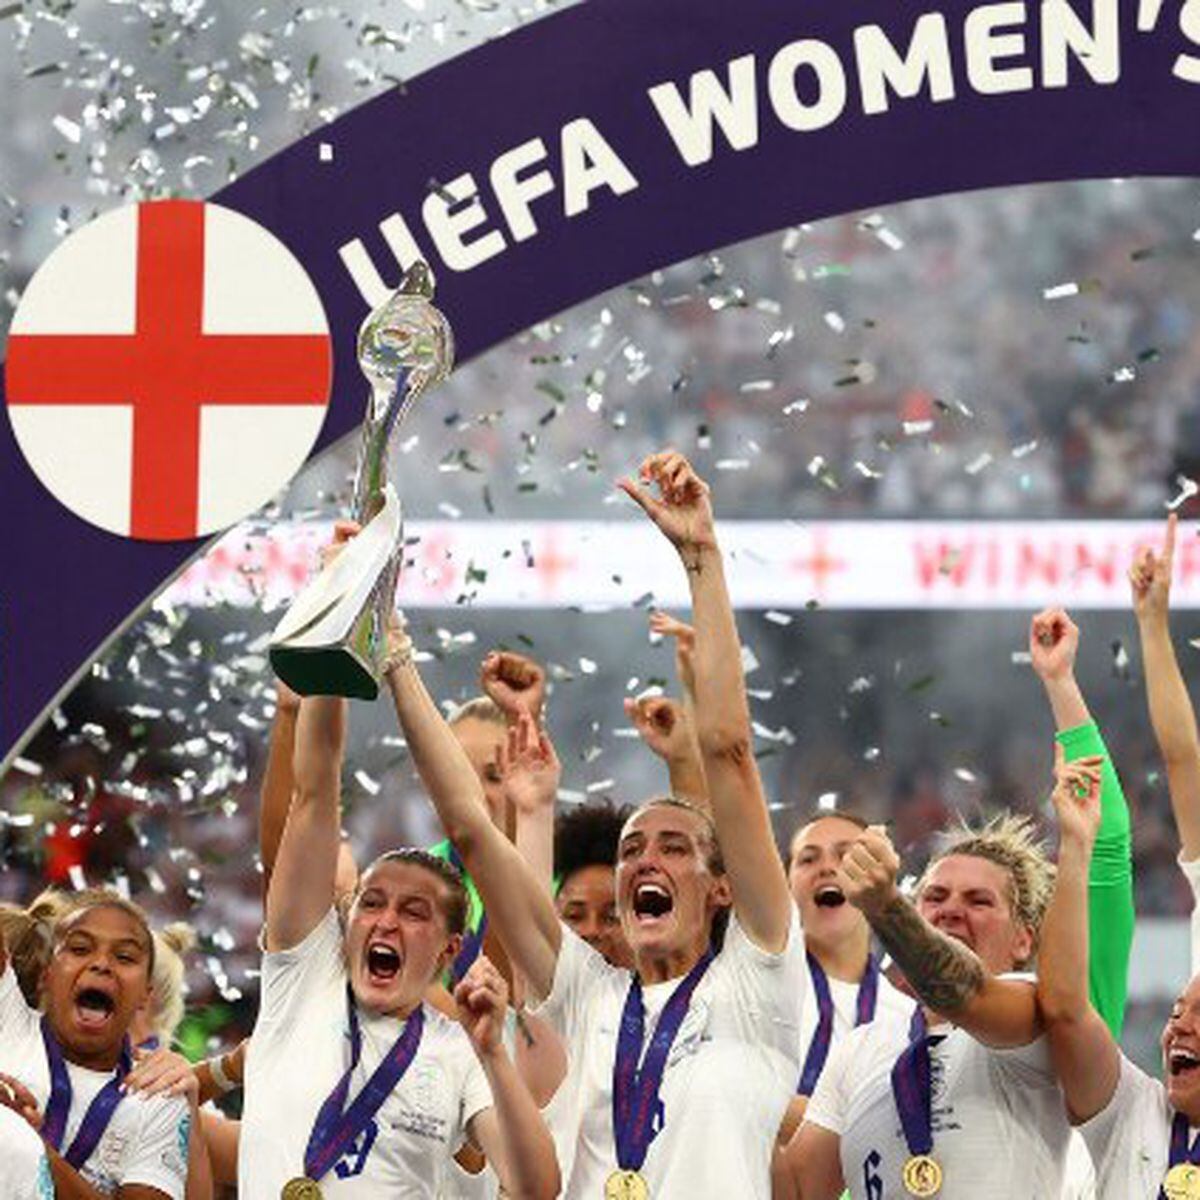 Inglaterra vence Áustria por 1x0 na abertura da Eurocopa feminina